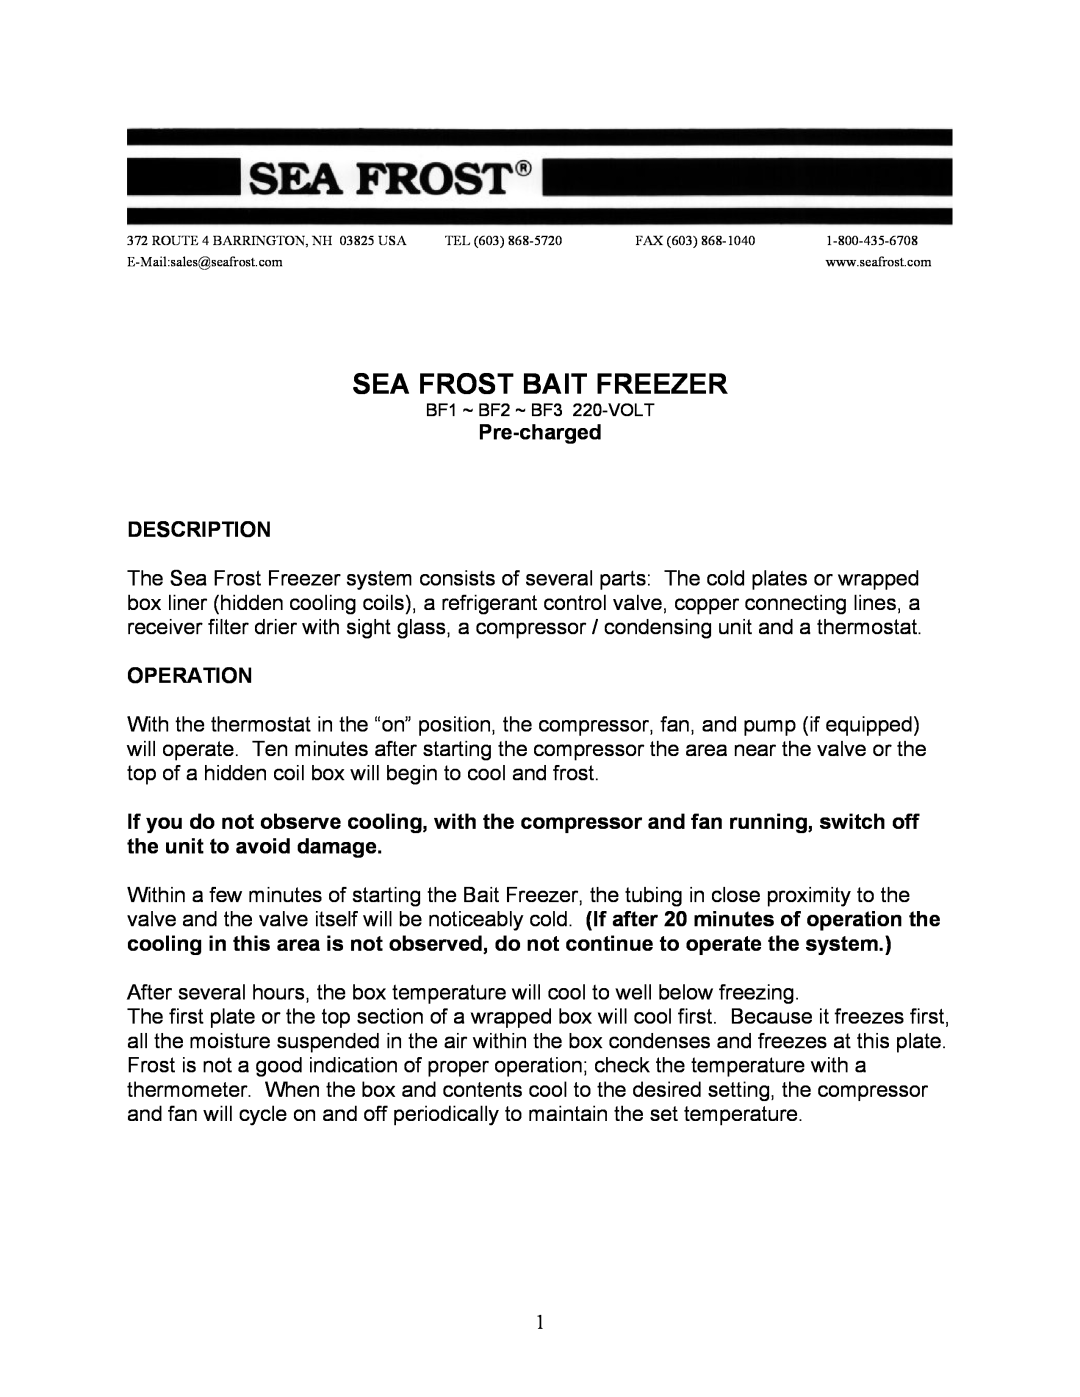 Sea Frost manual Sea Frost Bait Freezer, Pre-charged DESCRIPTION, Operation 